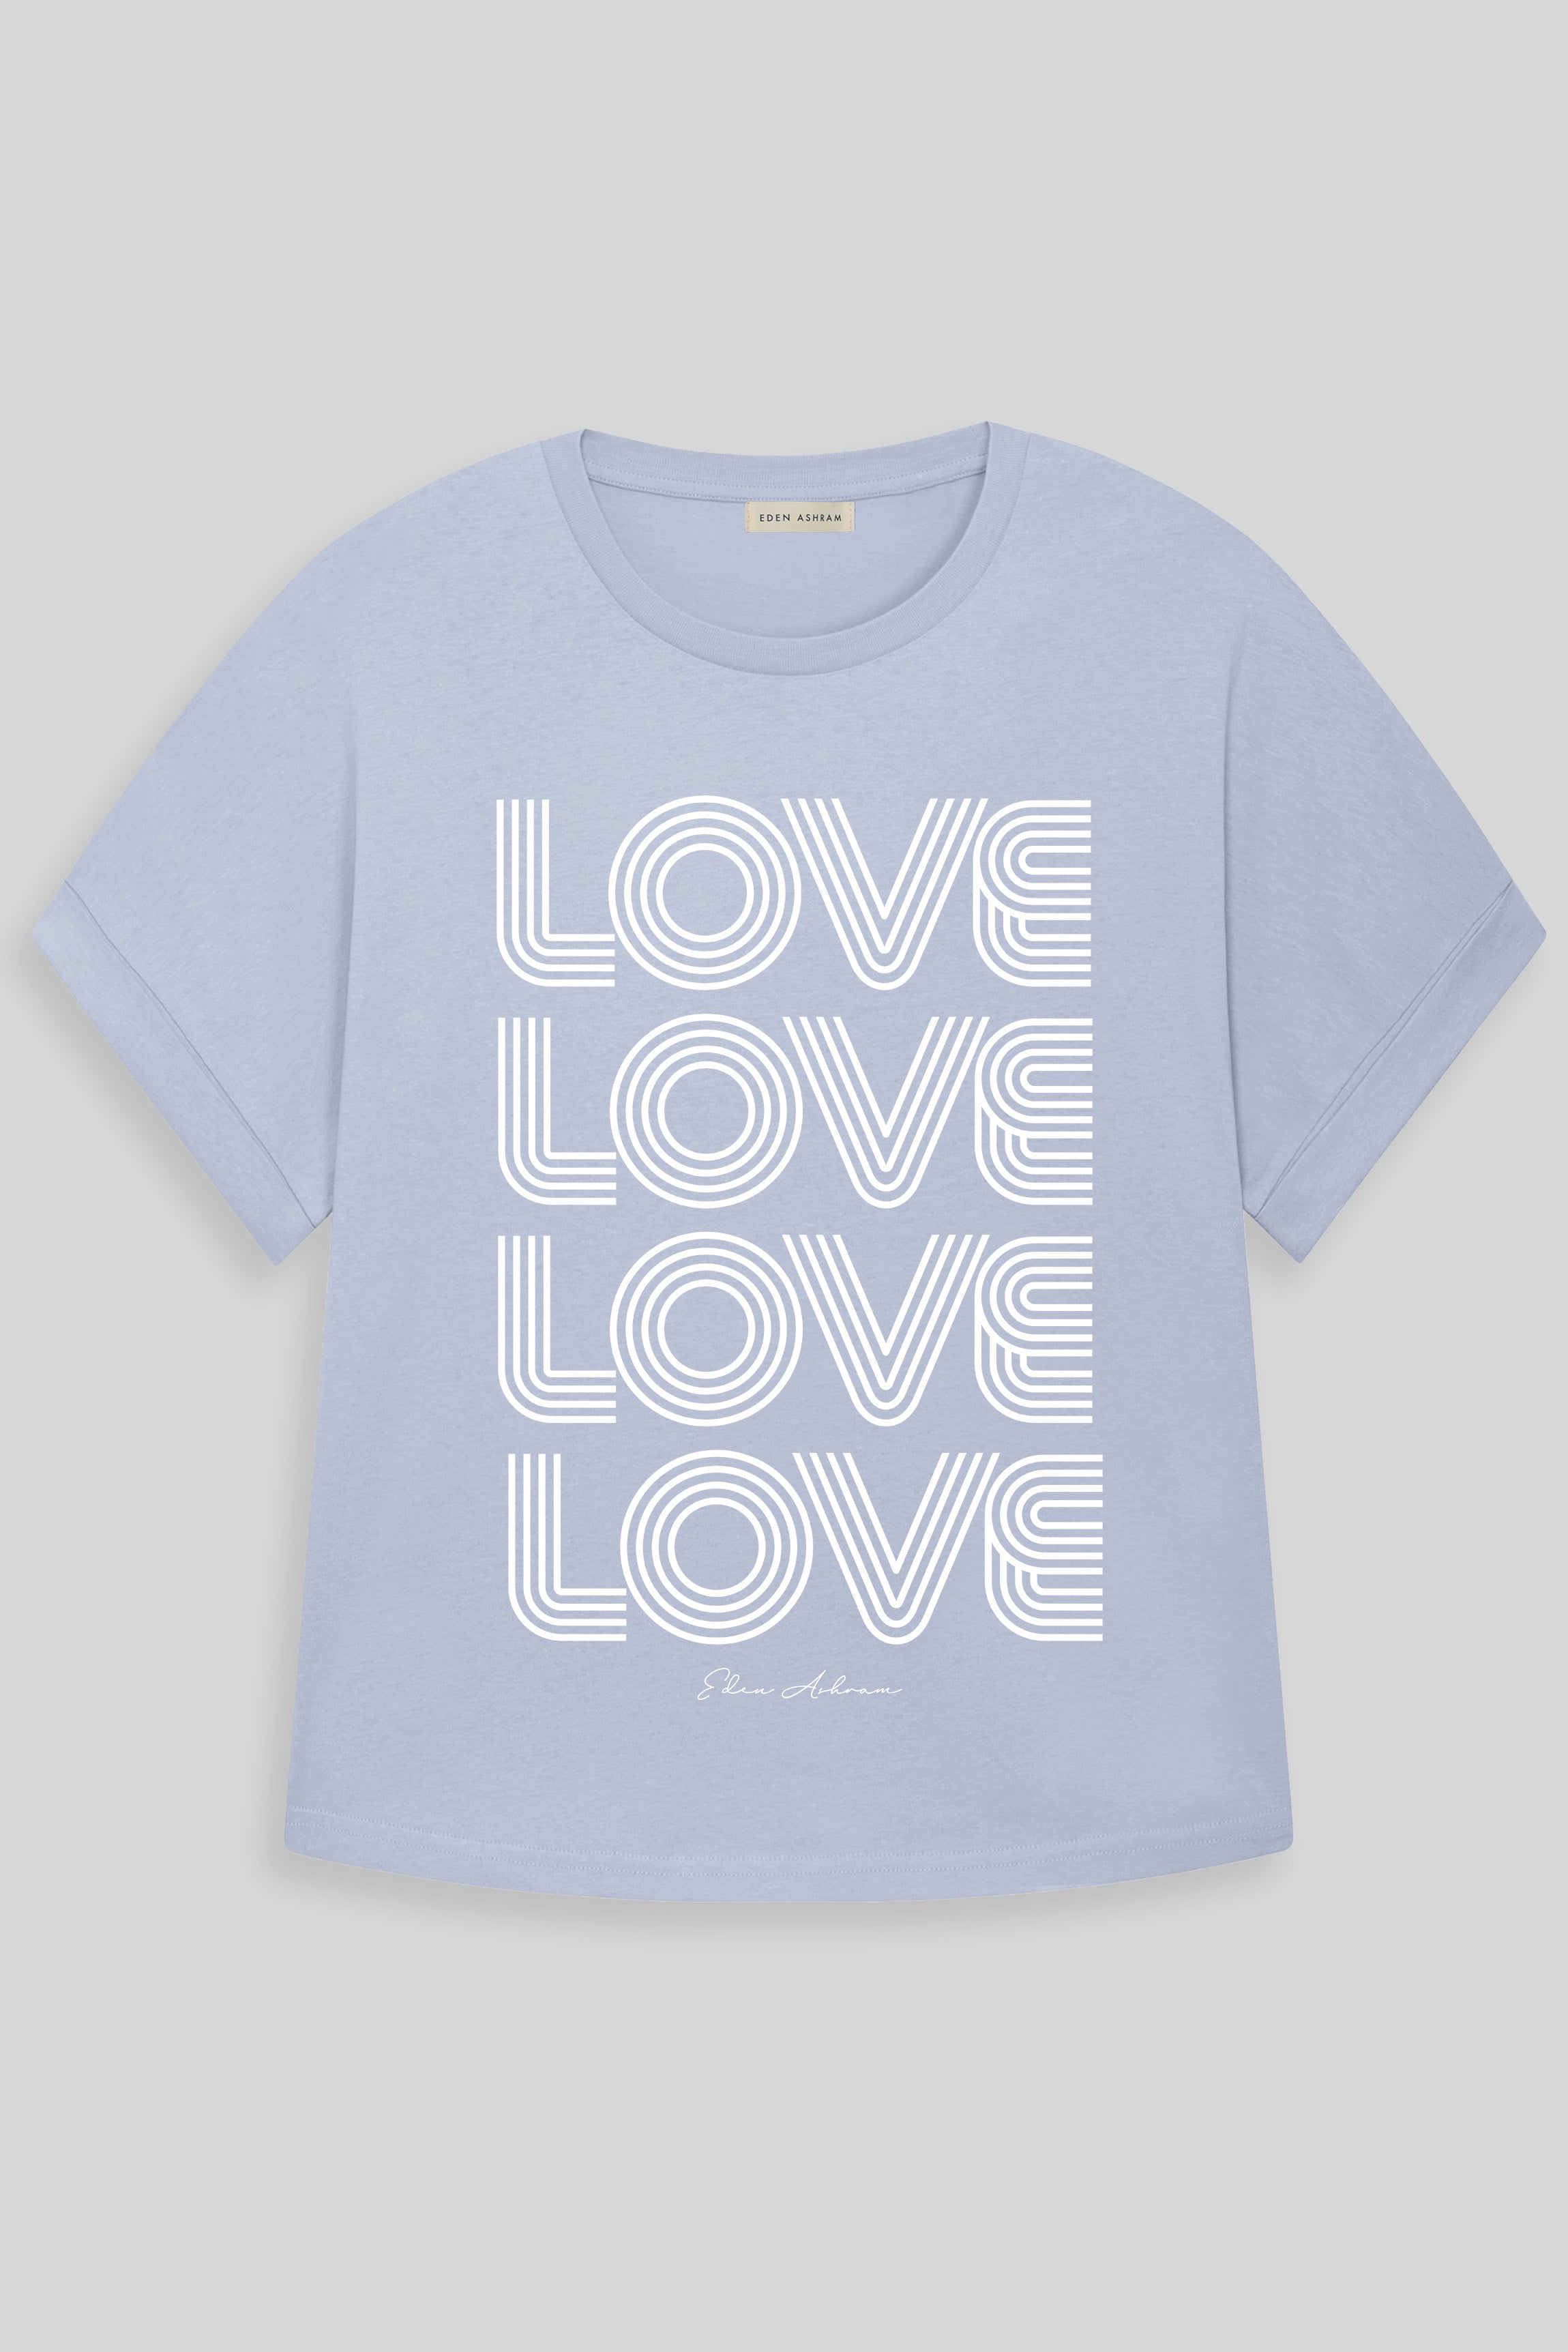 EDEN ASHRAM 4 Love Oversized Premium Rolled Sleeve T-Shirt Baby Blue